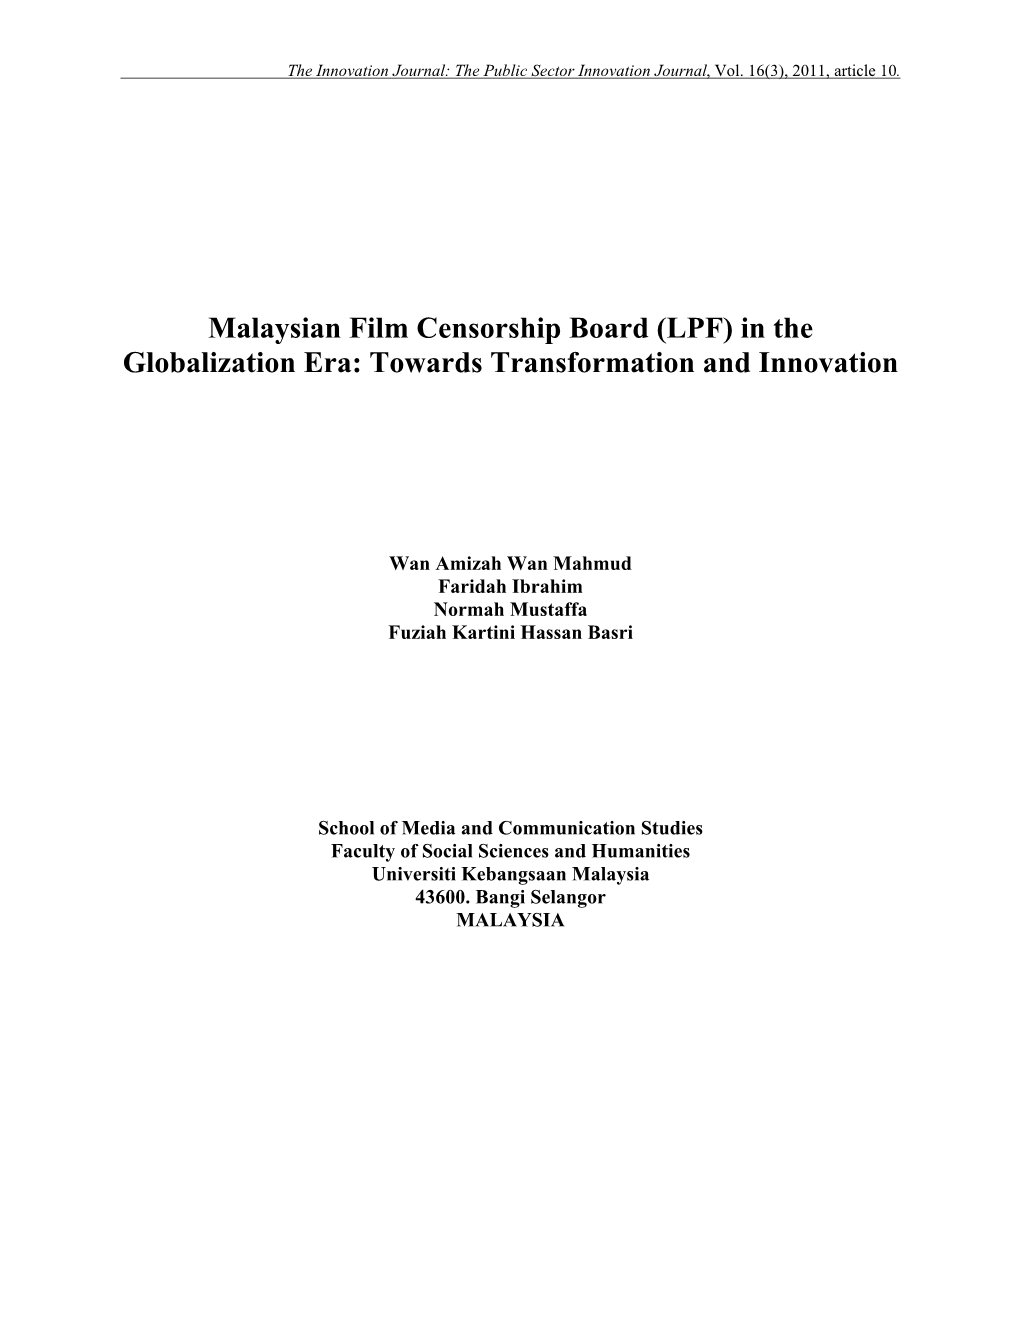 Malaysian Film Censorship Board (LPF) in the Globalization Era: Towards Transformation and Innovation